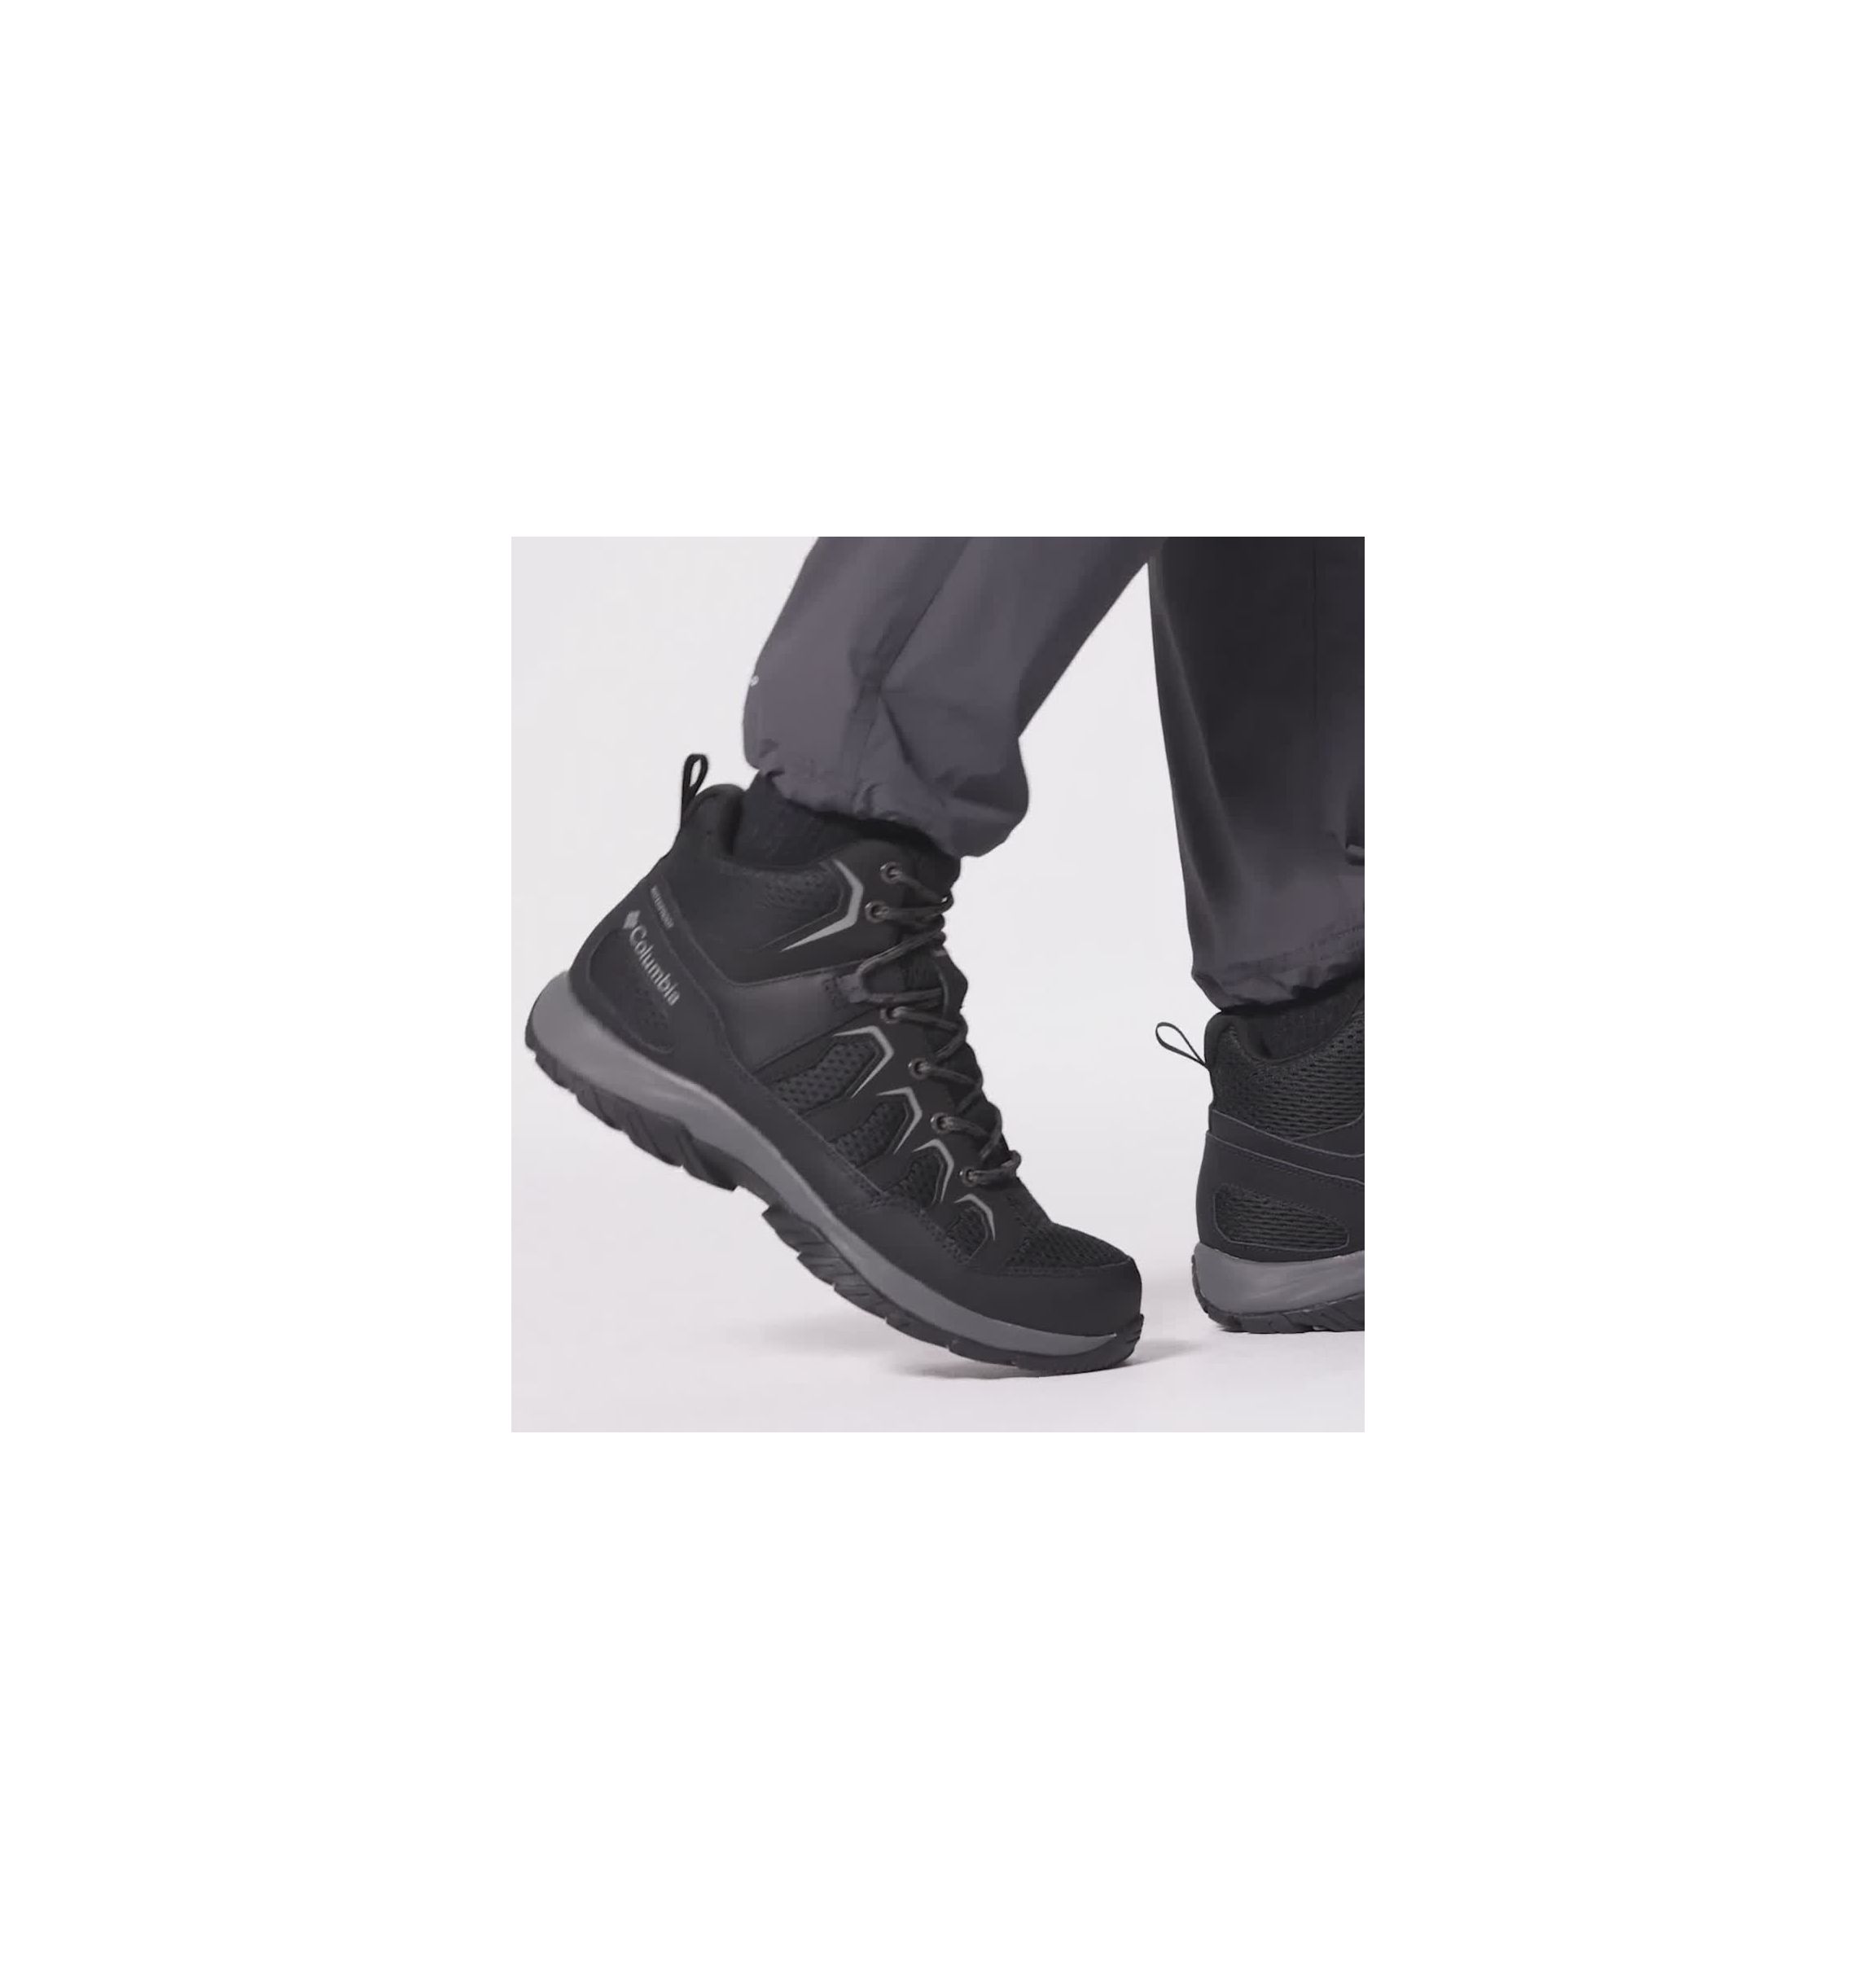 Men's Granite Trail™ Mid Waterproof Shoe